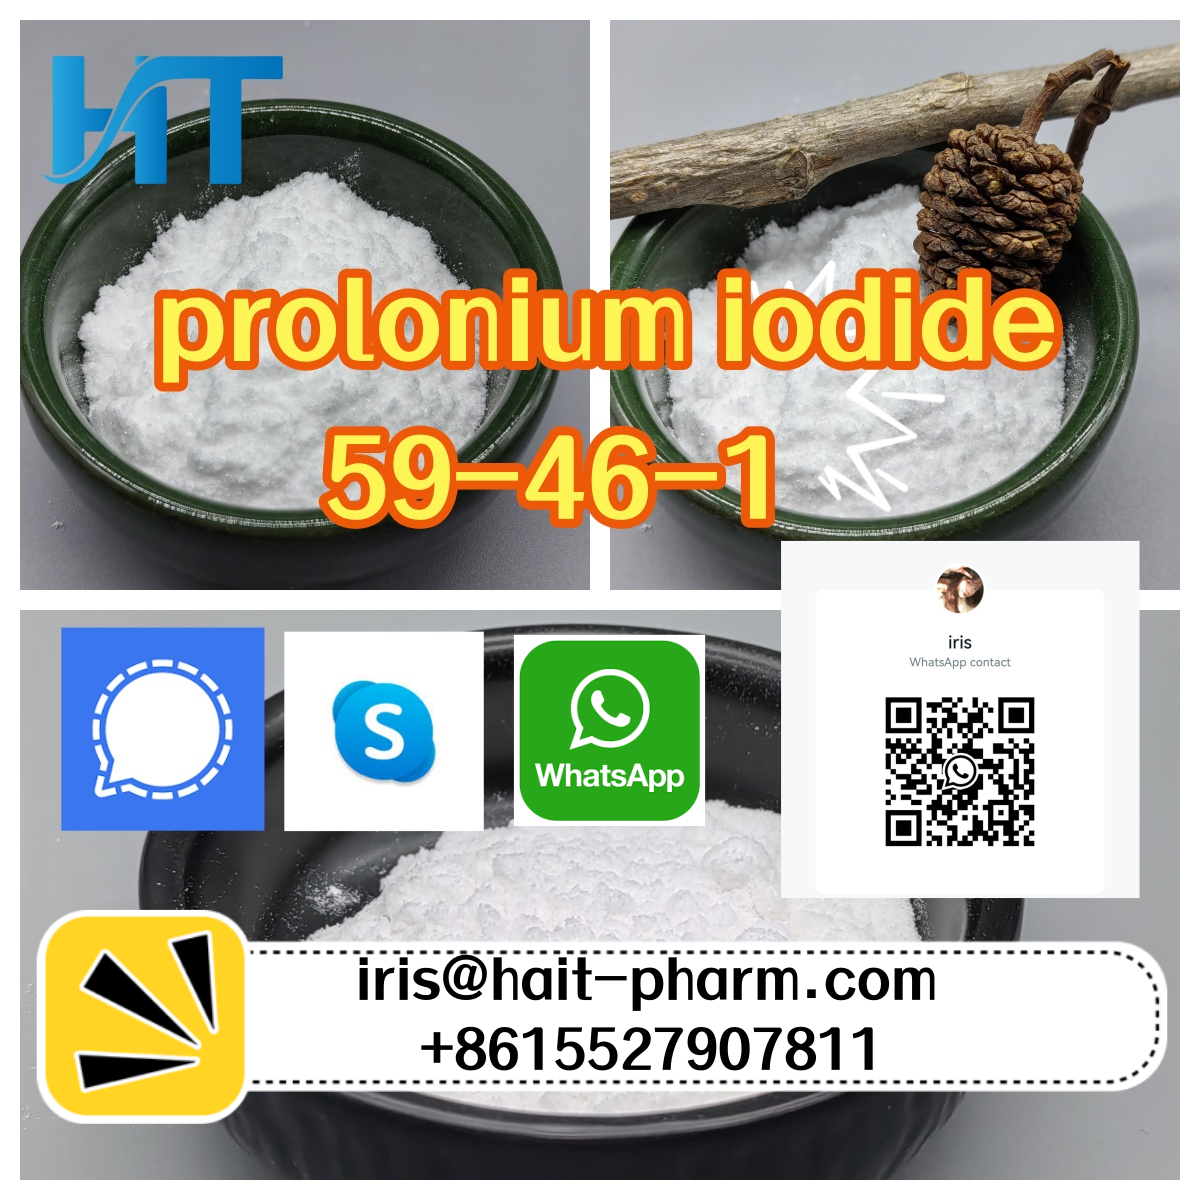 prolonium iodide.jpg